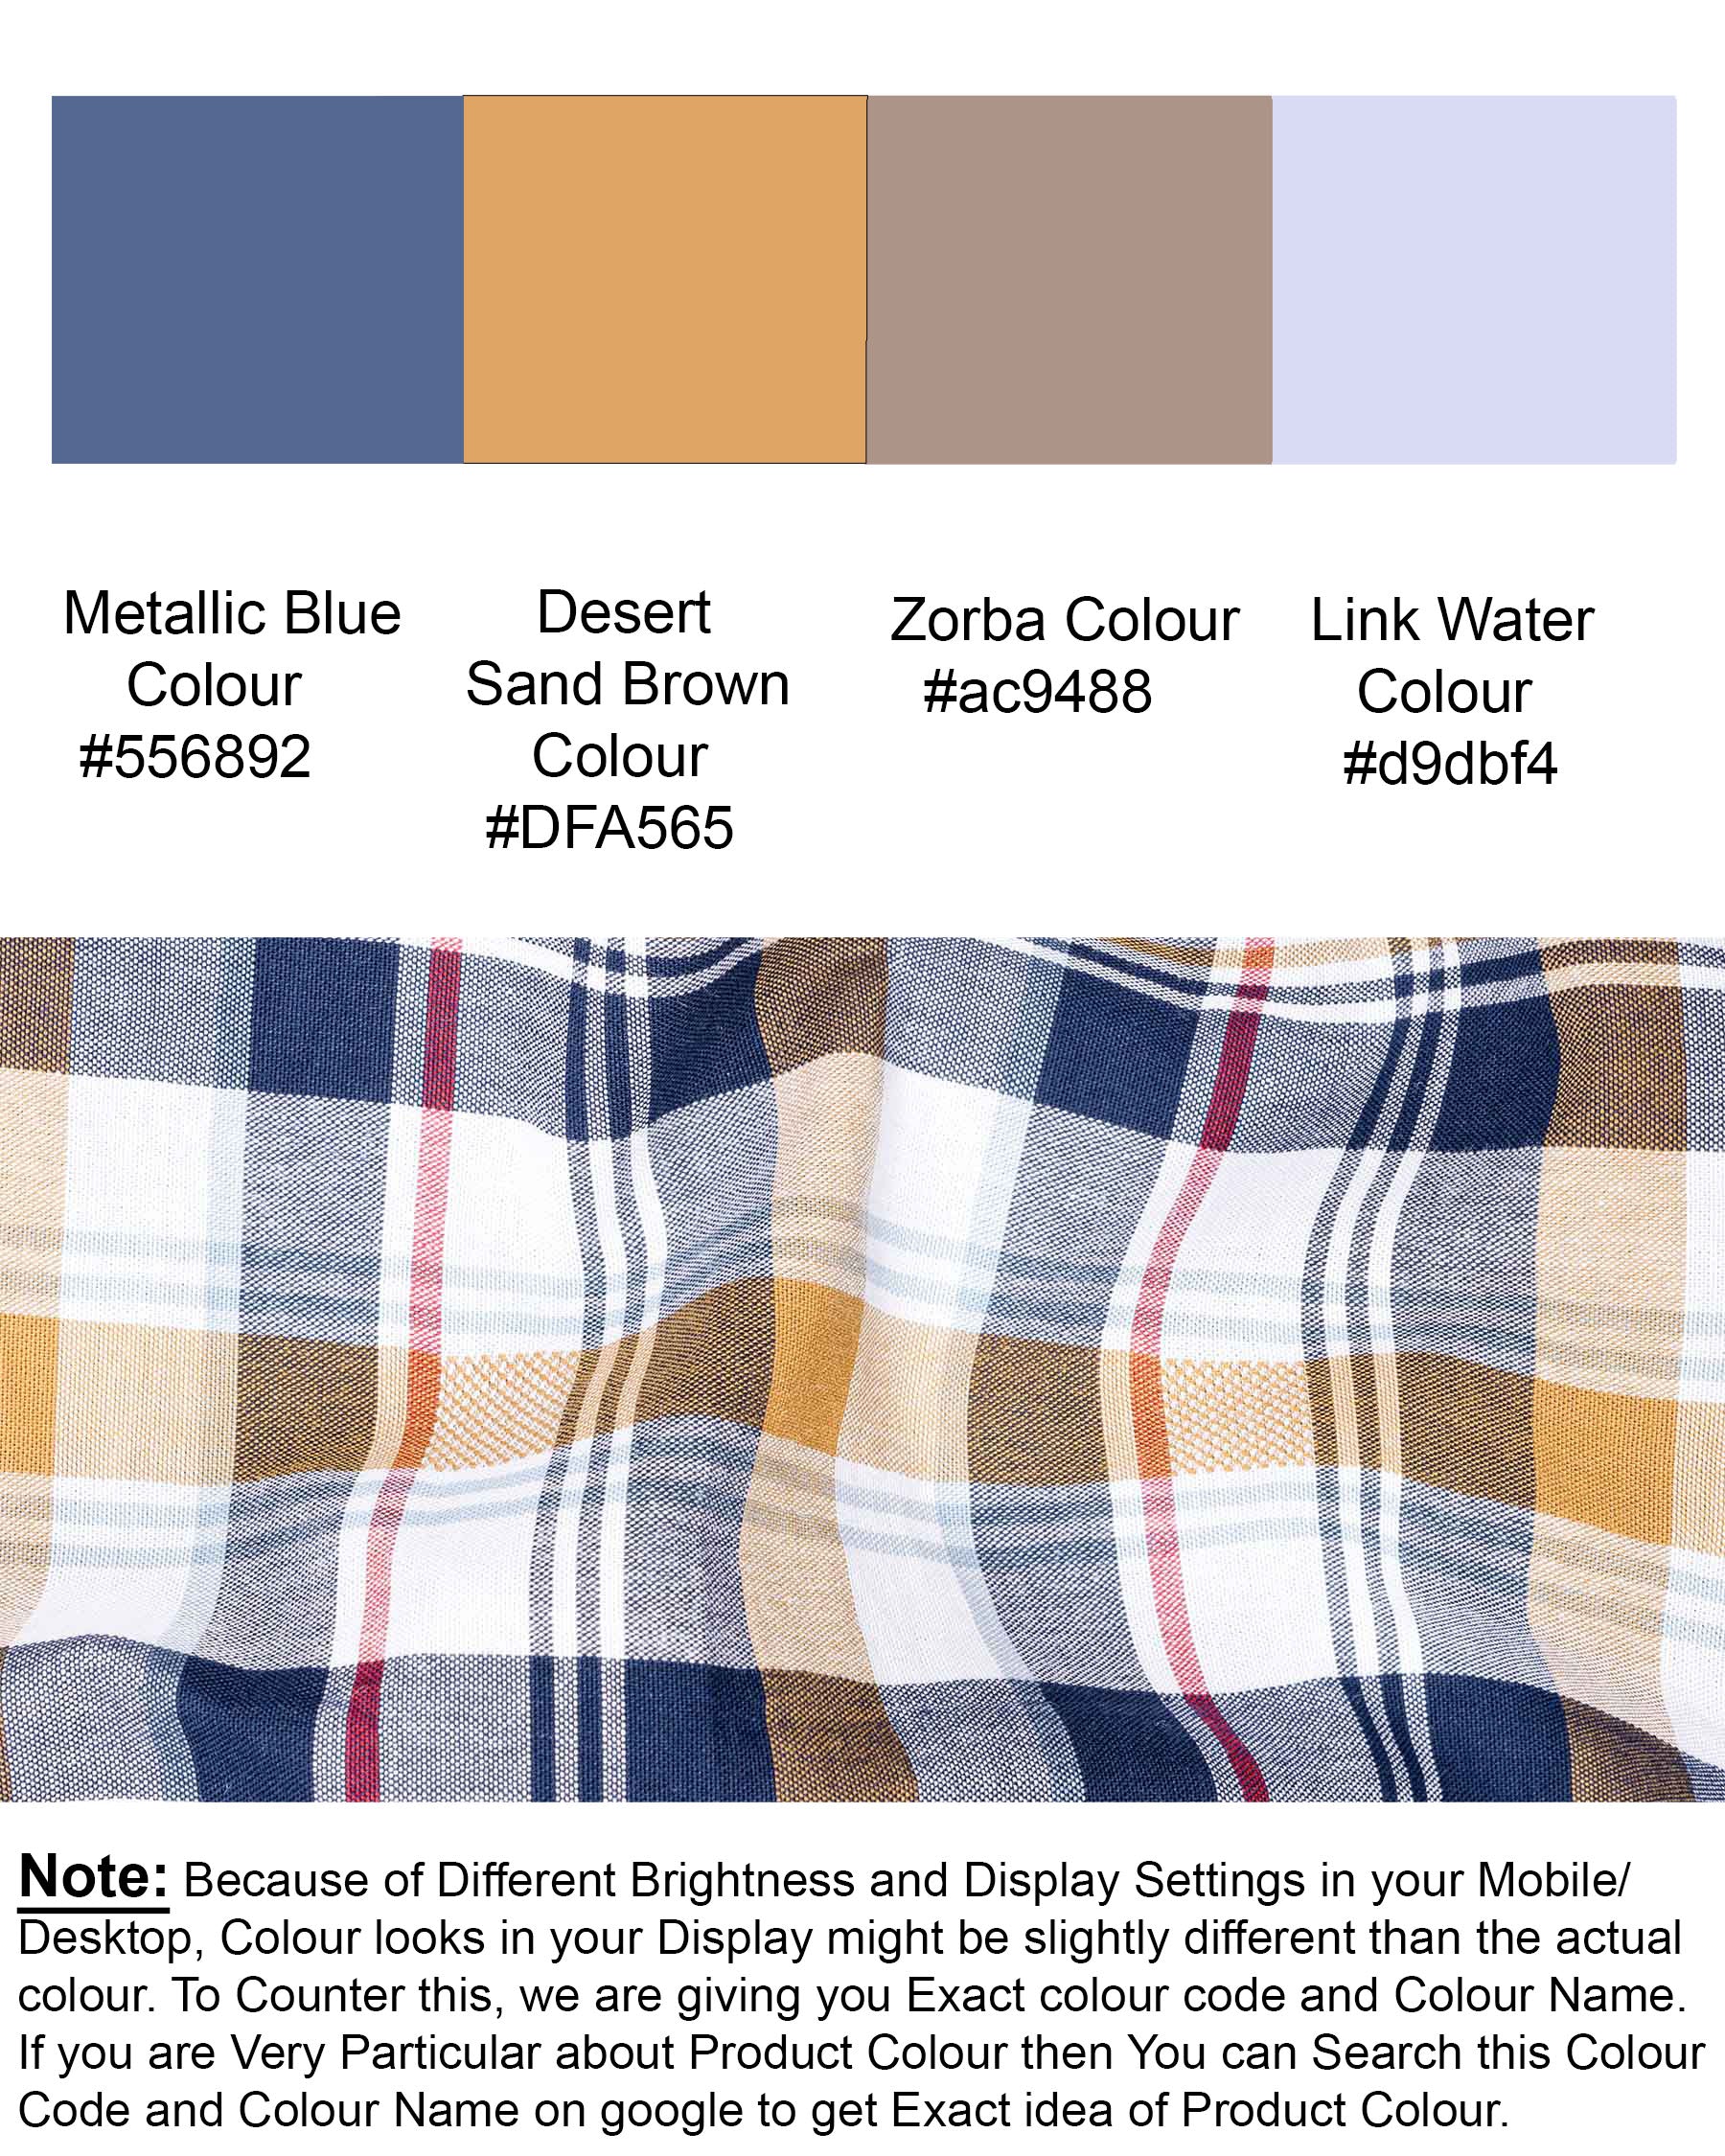 Metallic Blue and Desert Sand Brown Plaid Dobby Textured Premium Giza Cotton Shirt 6848-BD-BLE-38,6848-BD-BLE-38,6848-BD-BLE-39,6848-BD-BLE-39,6848-BD-BLE-40,6848-BD-BLE-40,6848-BD-BLE-42,6848-BD-BLE-42,6848-BD-BLE-44,6848-BD-BLE-44,6848-BD-BLE-46,6848-BD-BLE-46,6848-BD-BLE-48,6848-BD-BLE-48,6848-BD-BLE-50,6848-BD-BLE-50,6848-BD-BLE-52,6848-BD-BLE-52